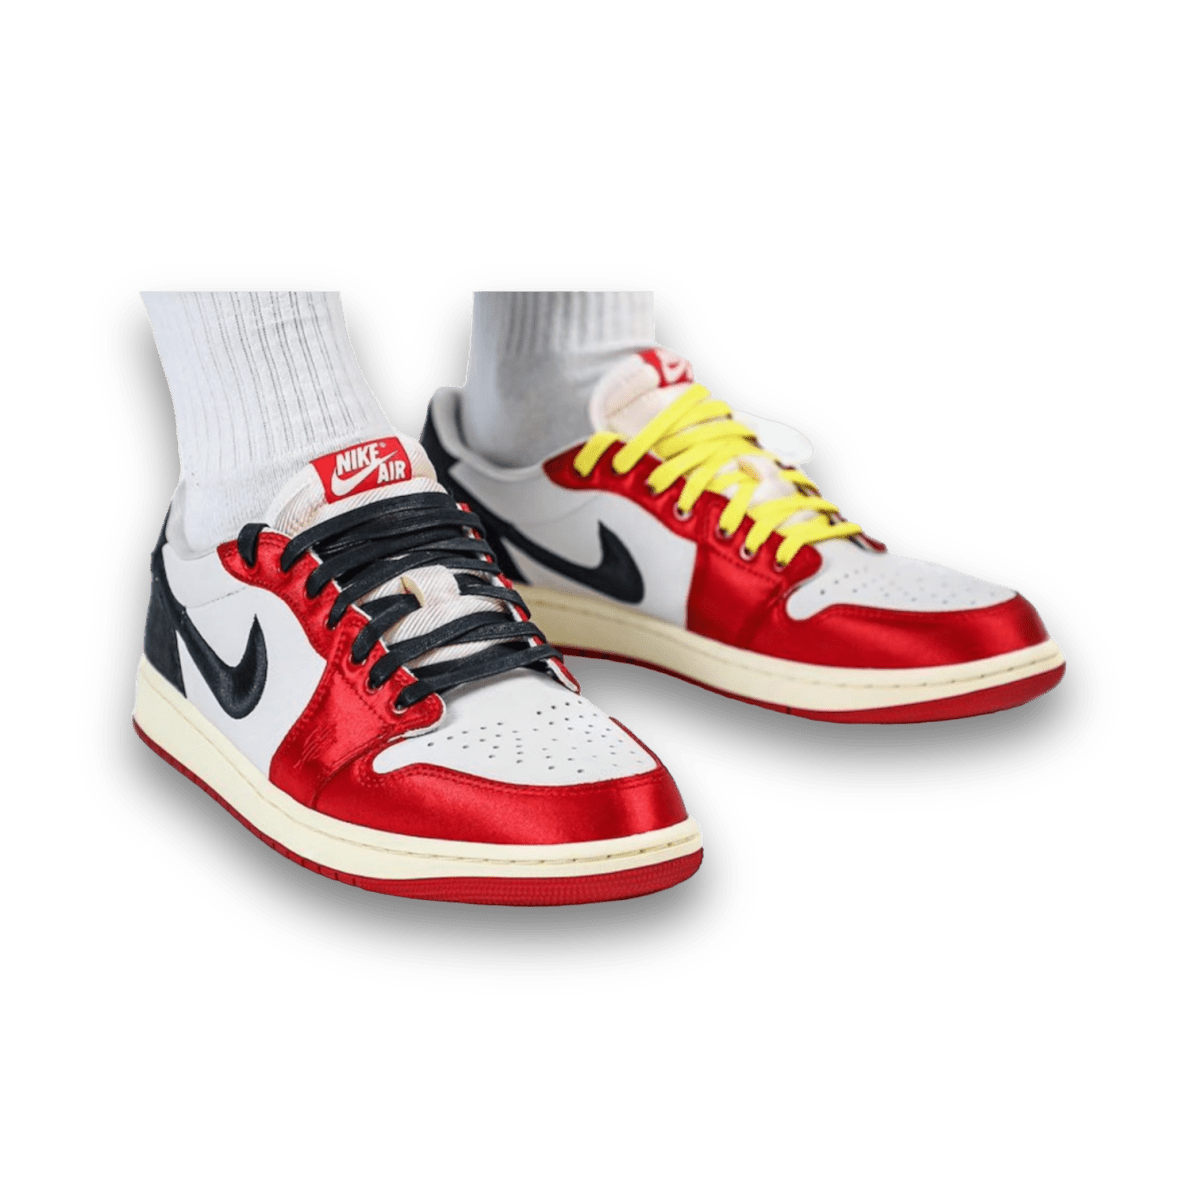 Trophy Room x Air Jordan 1 Retro Low OG SP - Low Sneaker - Jawns on Fire Sneakers & Streetwear